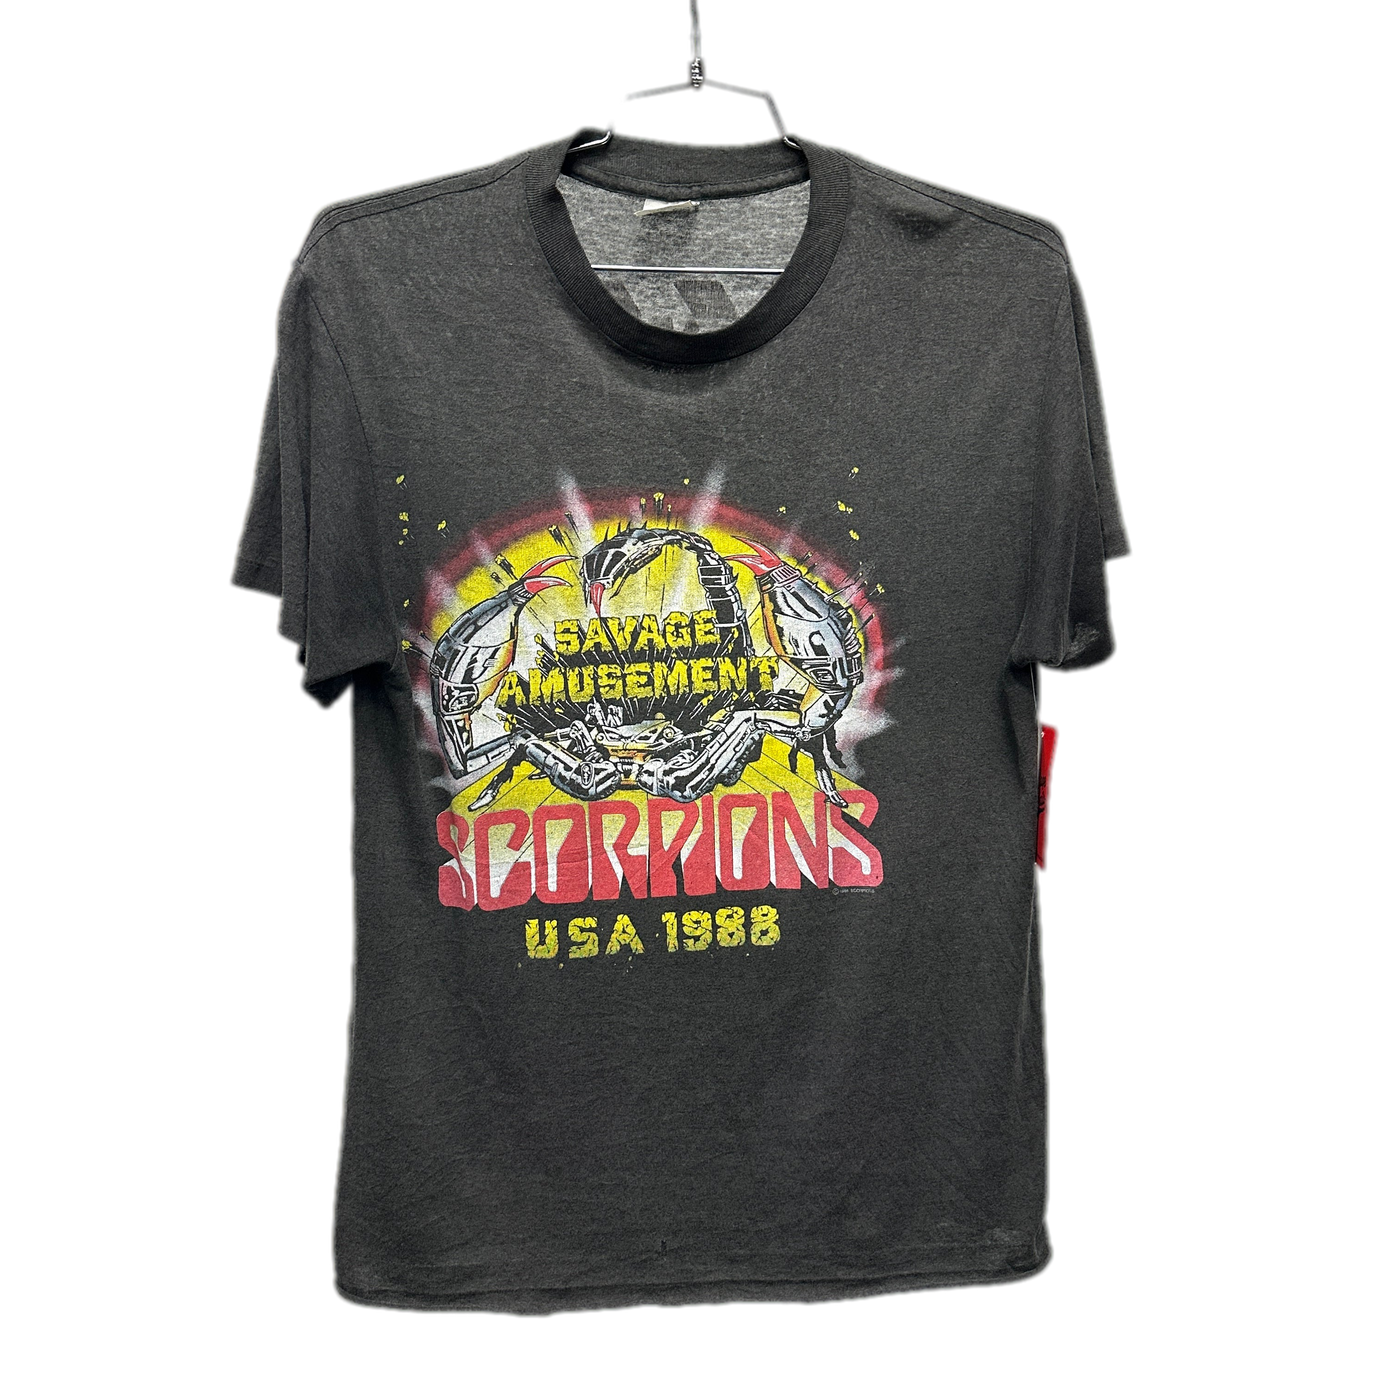 '88 Scorpions Grey Music T-Shirt sz L